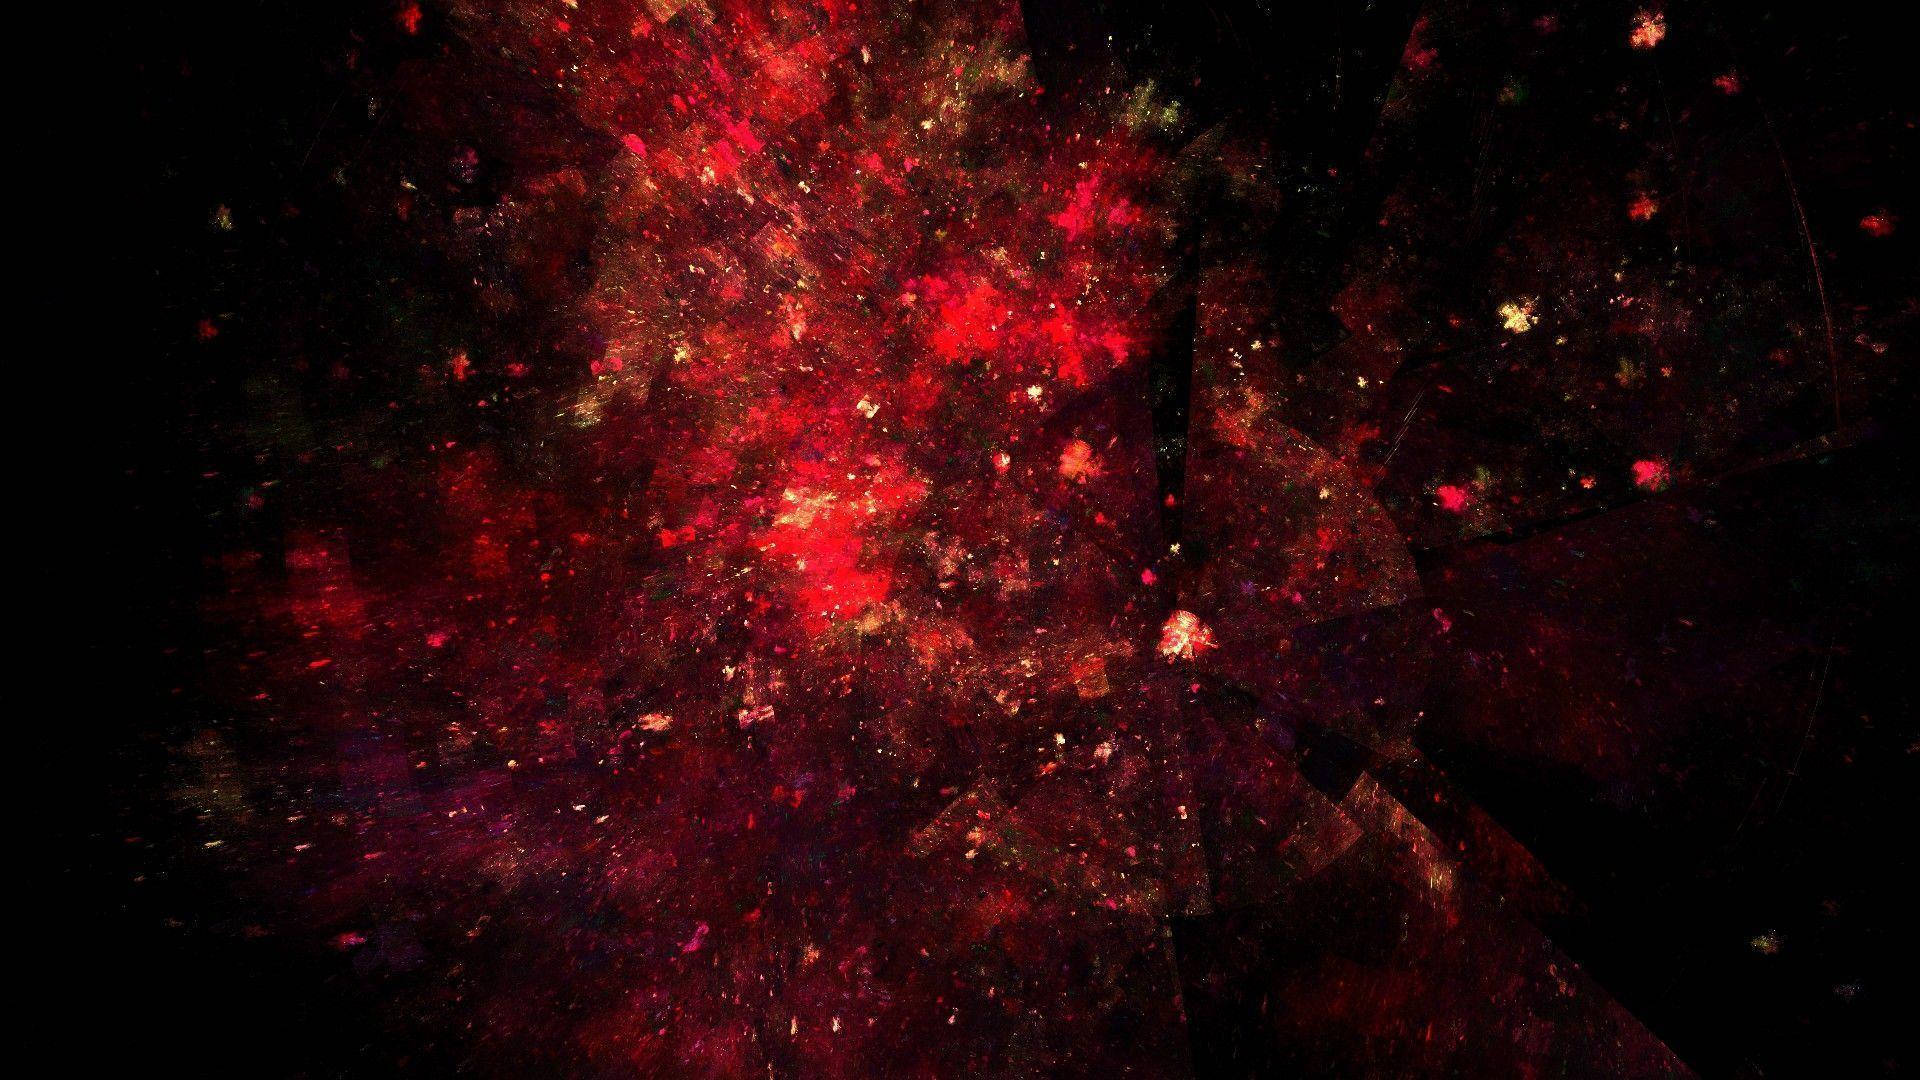 Dark Red Abstract Wallpaper